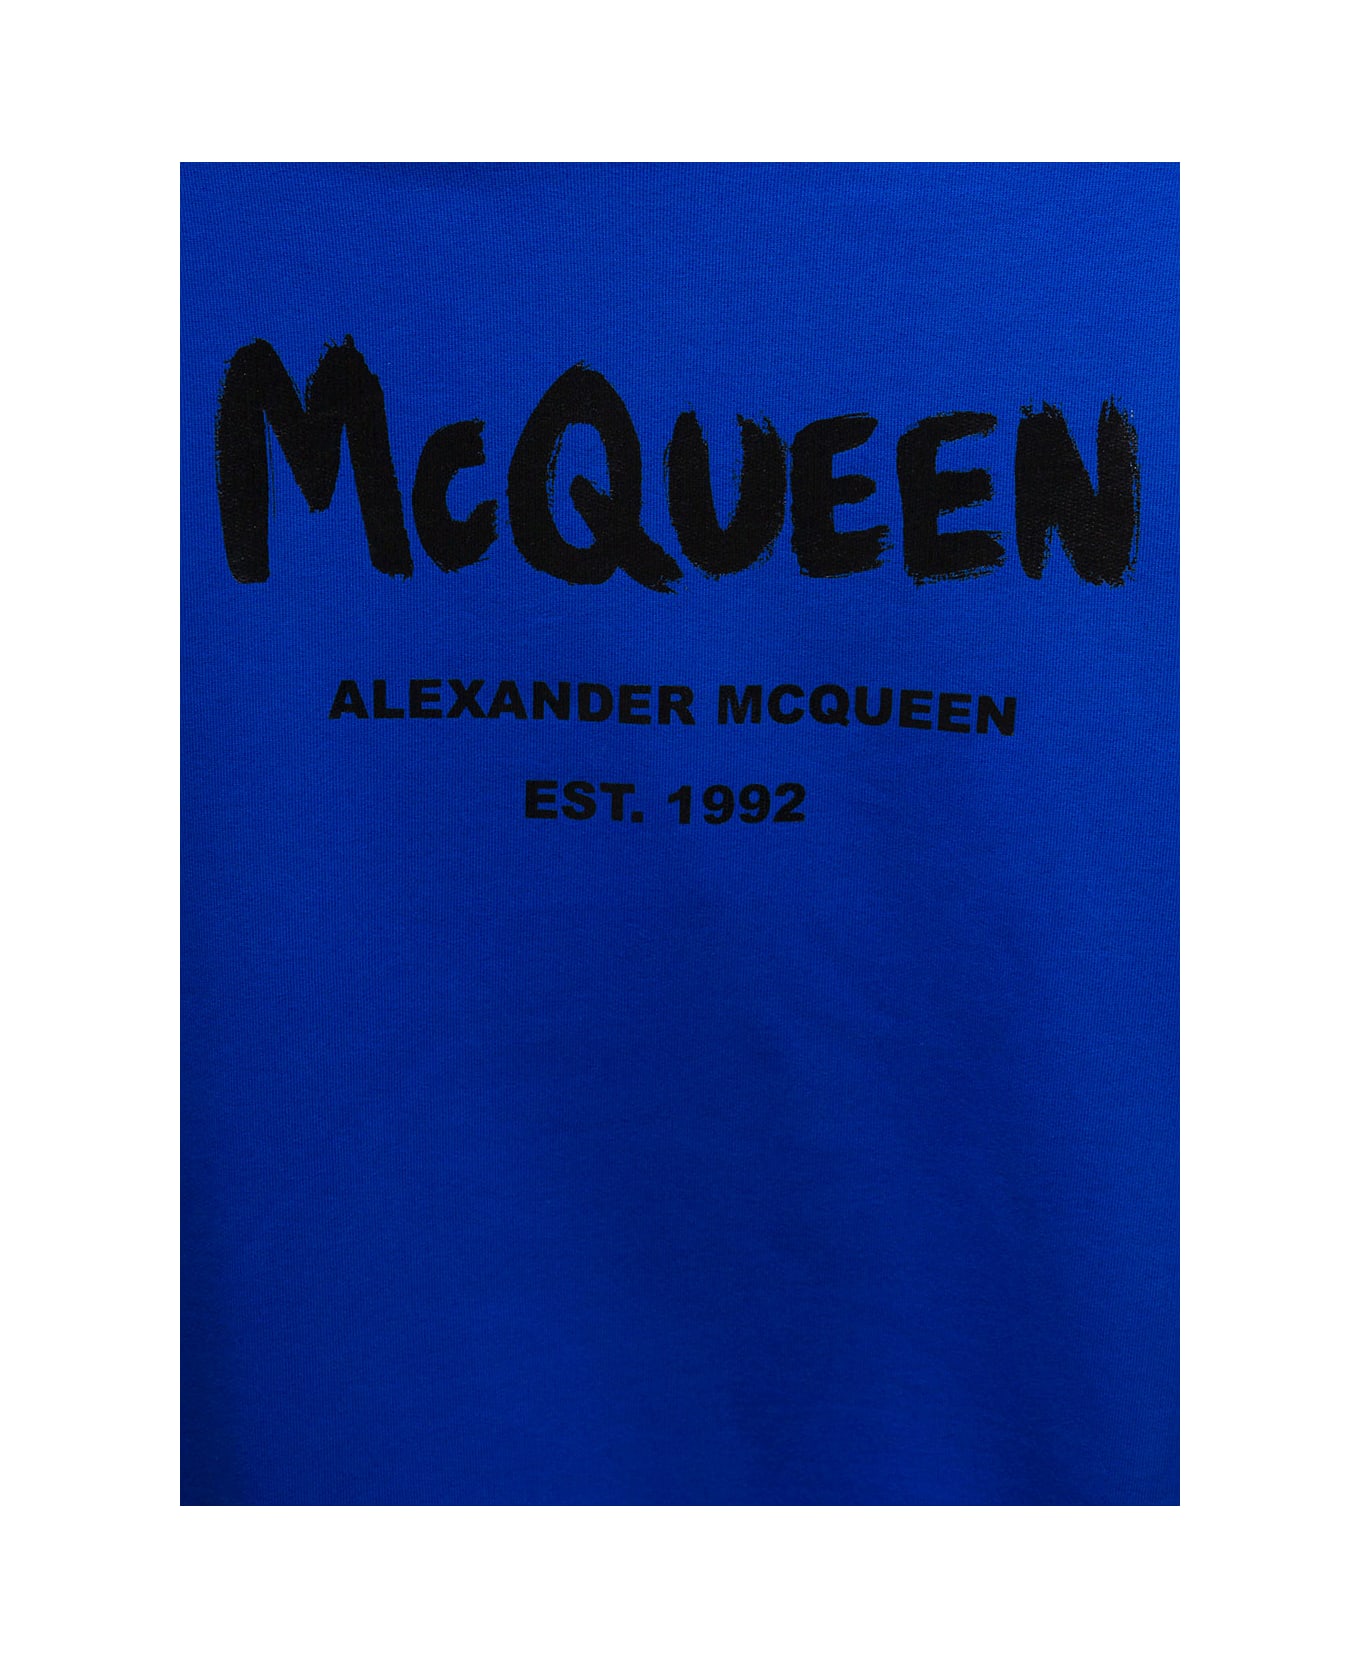 Alexander McQueen Blue Sweatshirt In Fleece Cotton With Tonal Logo Print On The Front Man - Blu